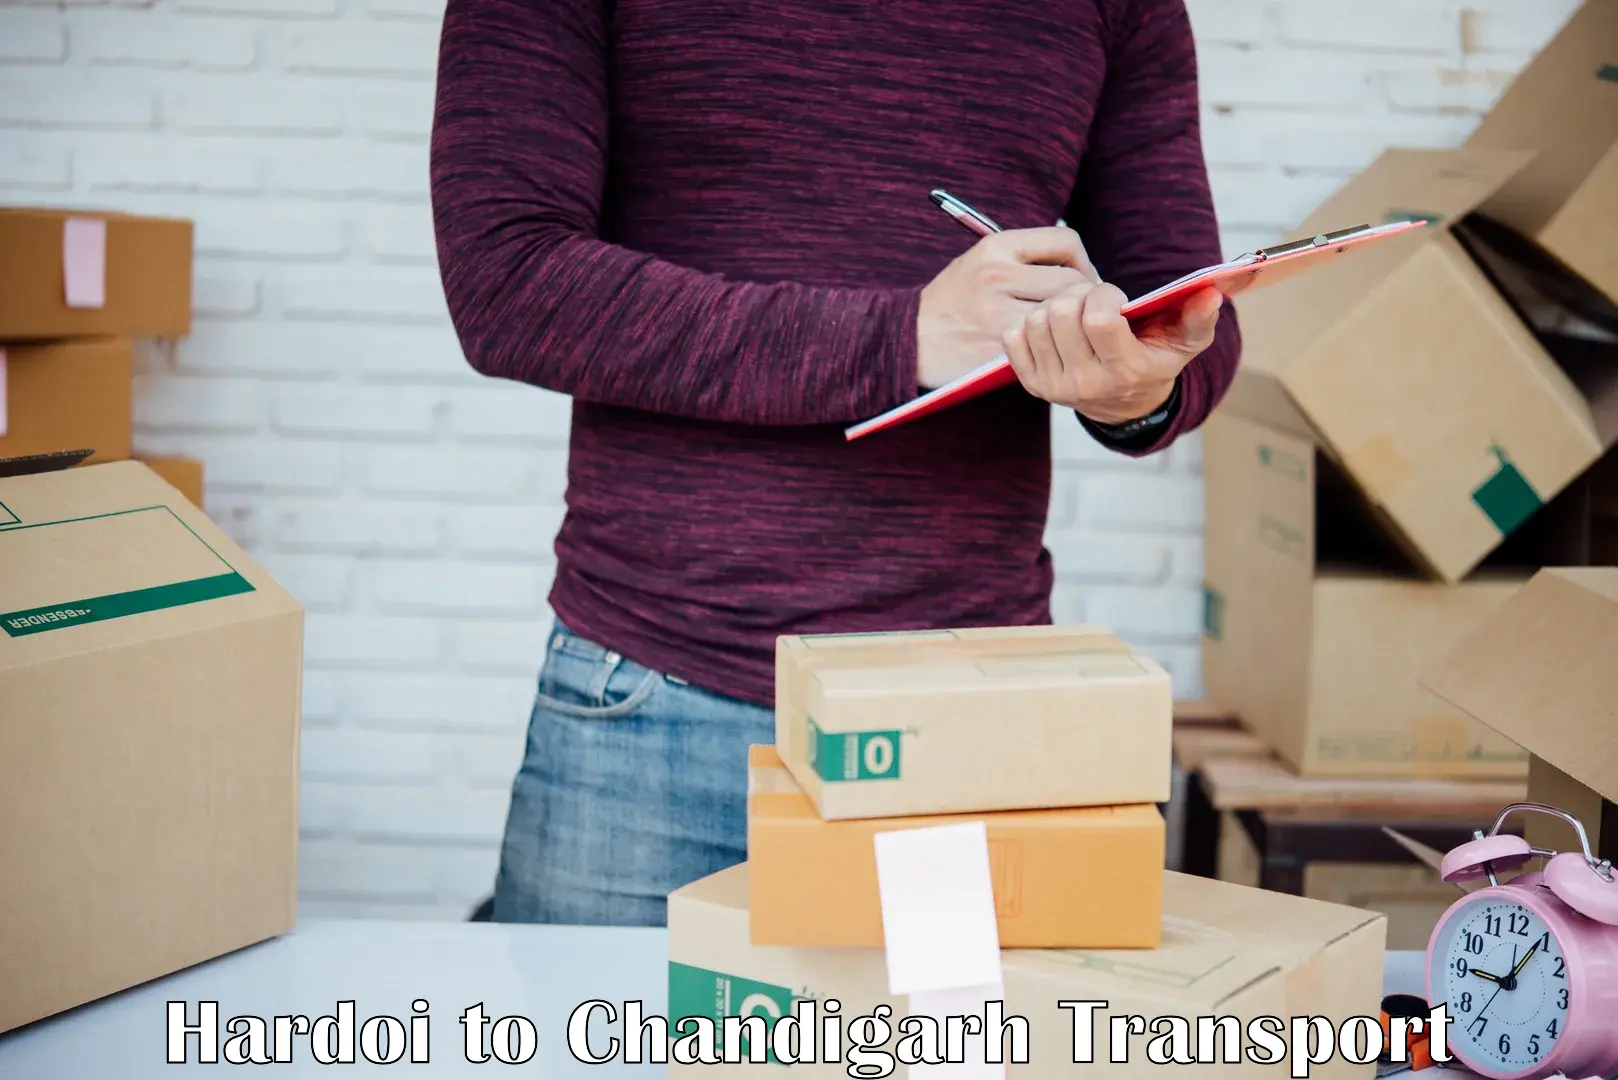 Daily transport service Hardoi to Chandigarh